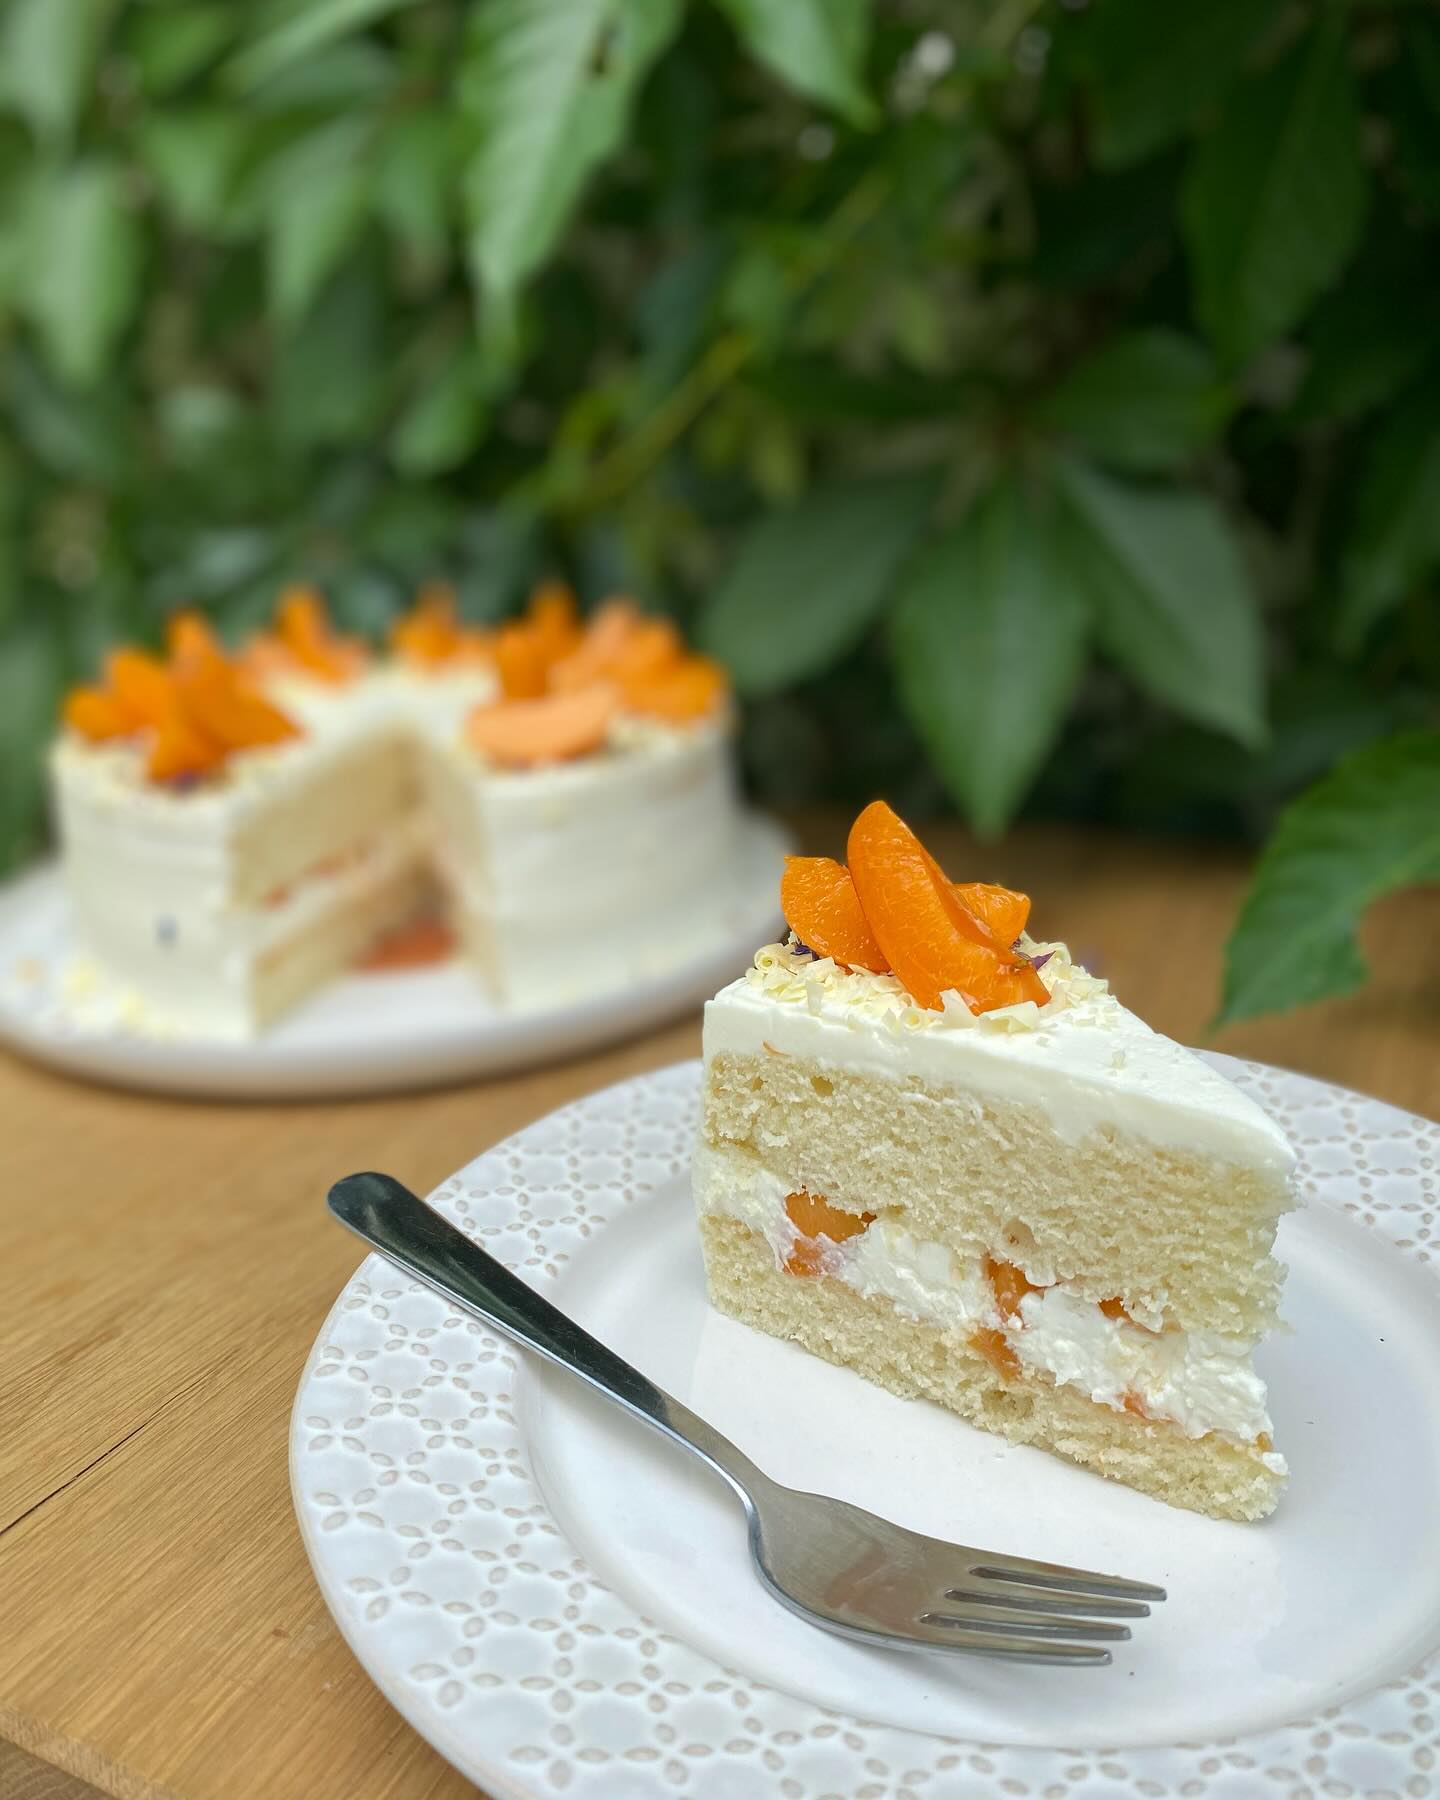 Vanilkový dort s meruňkami ????

#vanilkovydort #merunky #mascarpone #mladaboleslav #kavarna #tritecky #skodanezajit